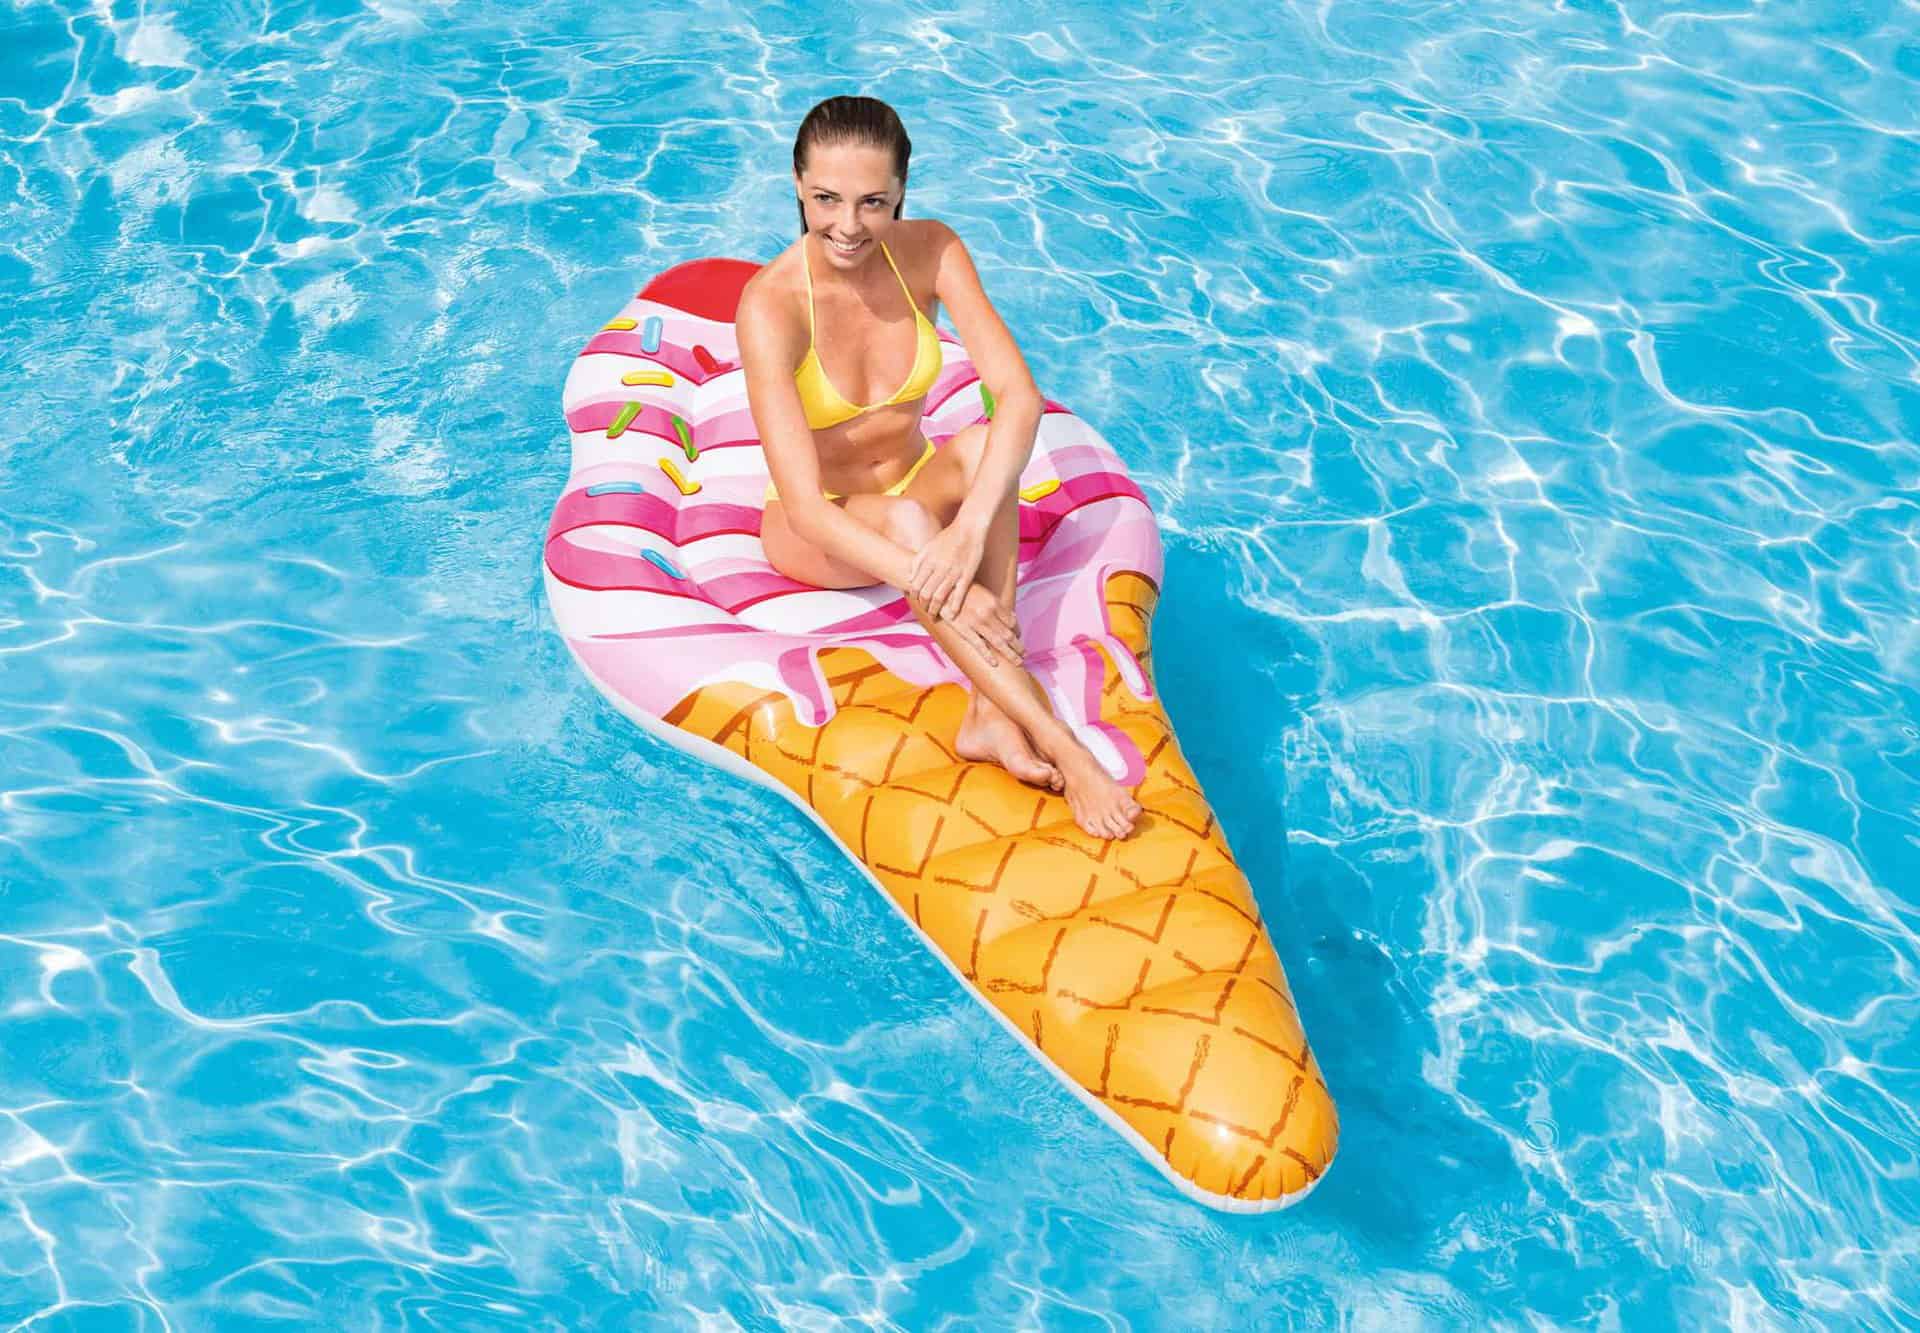 Airbed Floating Matrass Summer Beach Intex Ice Cream